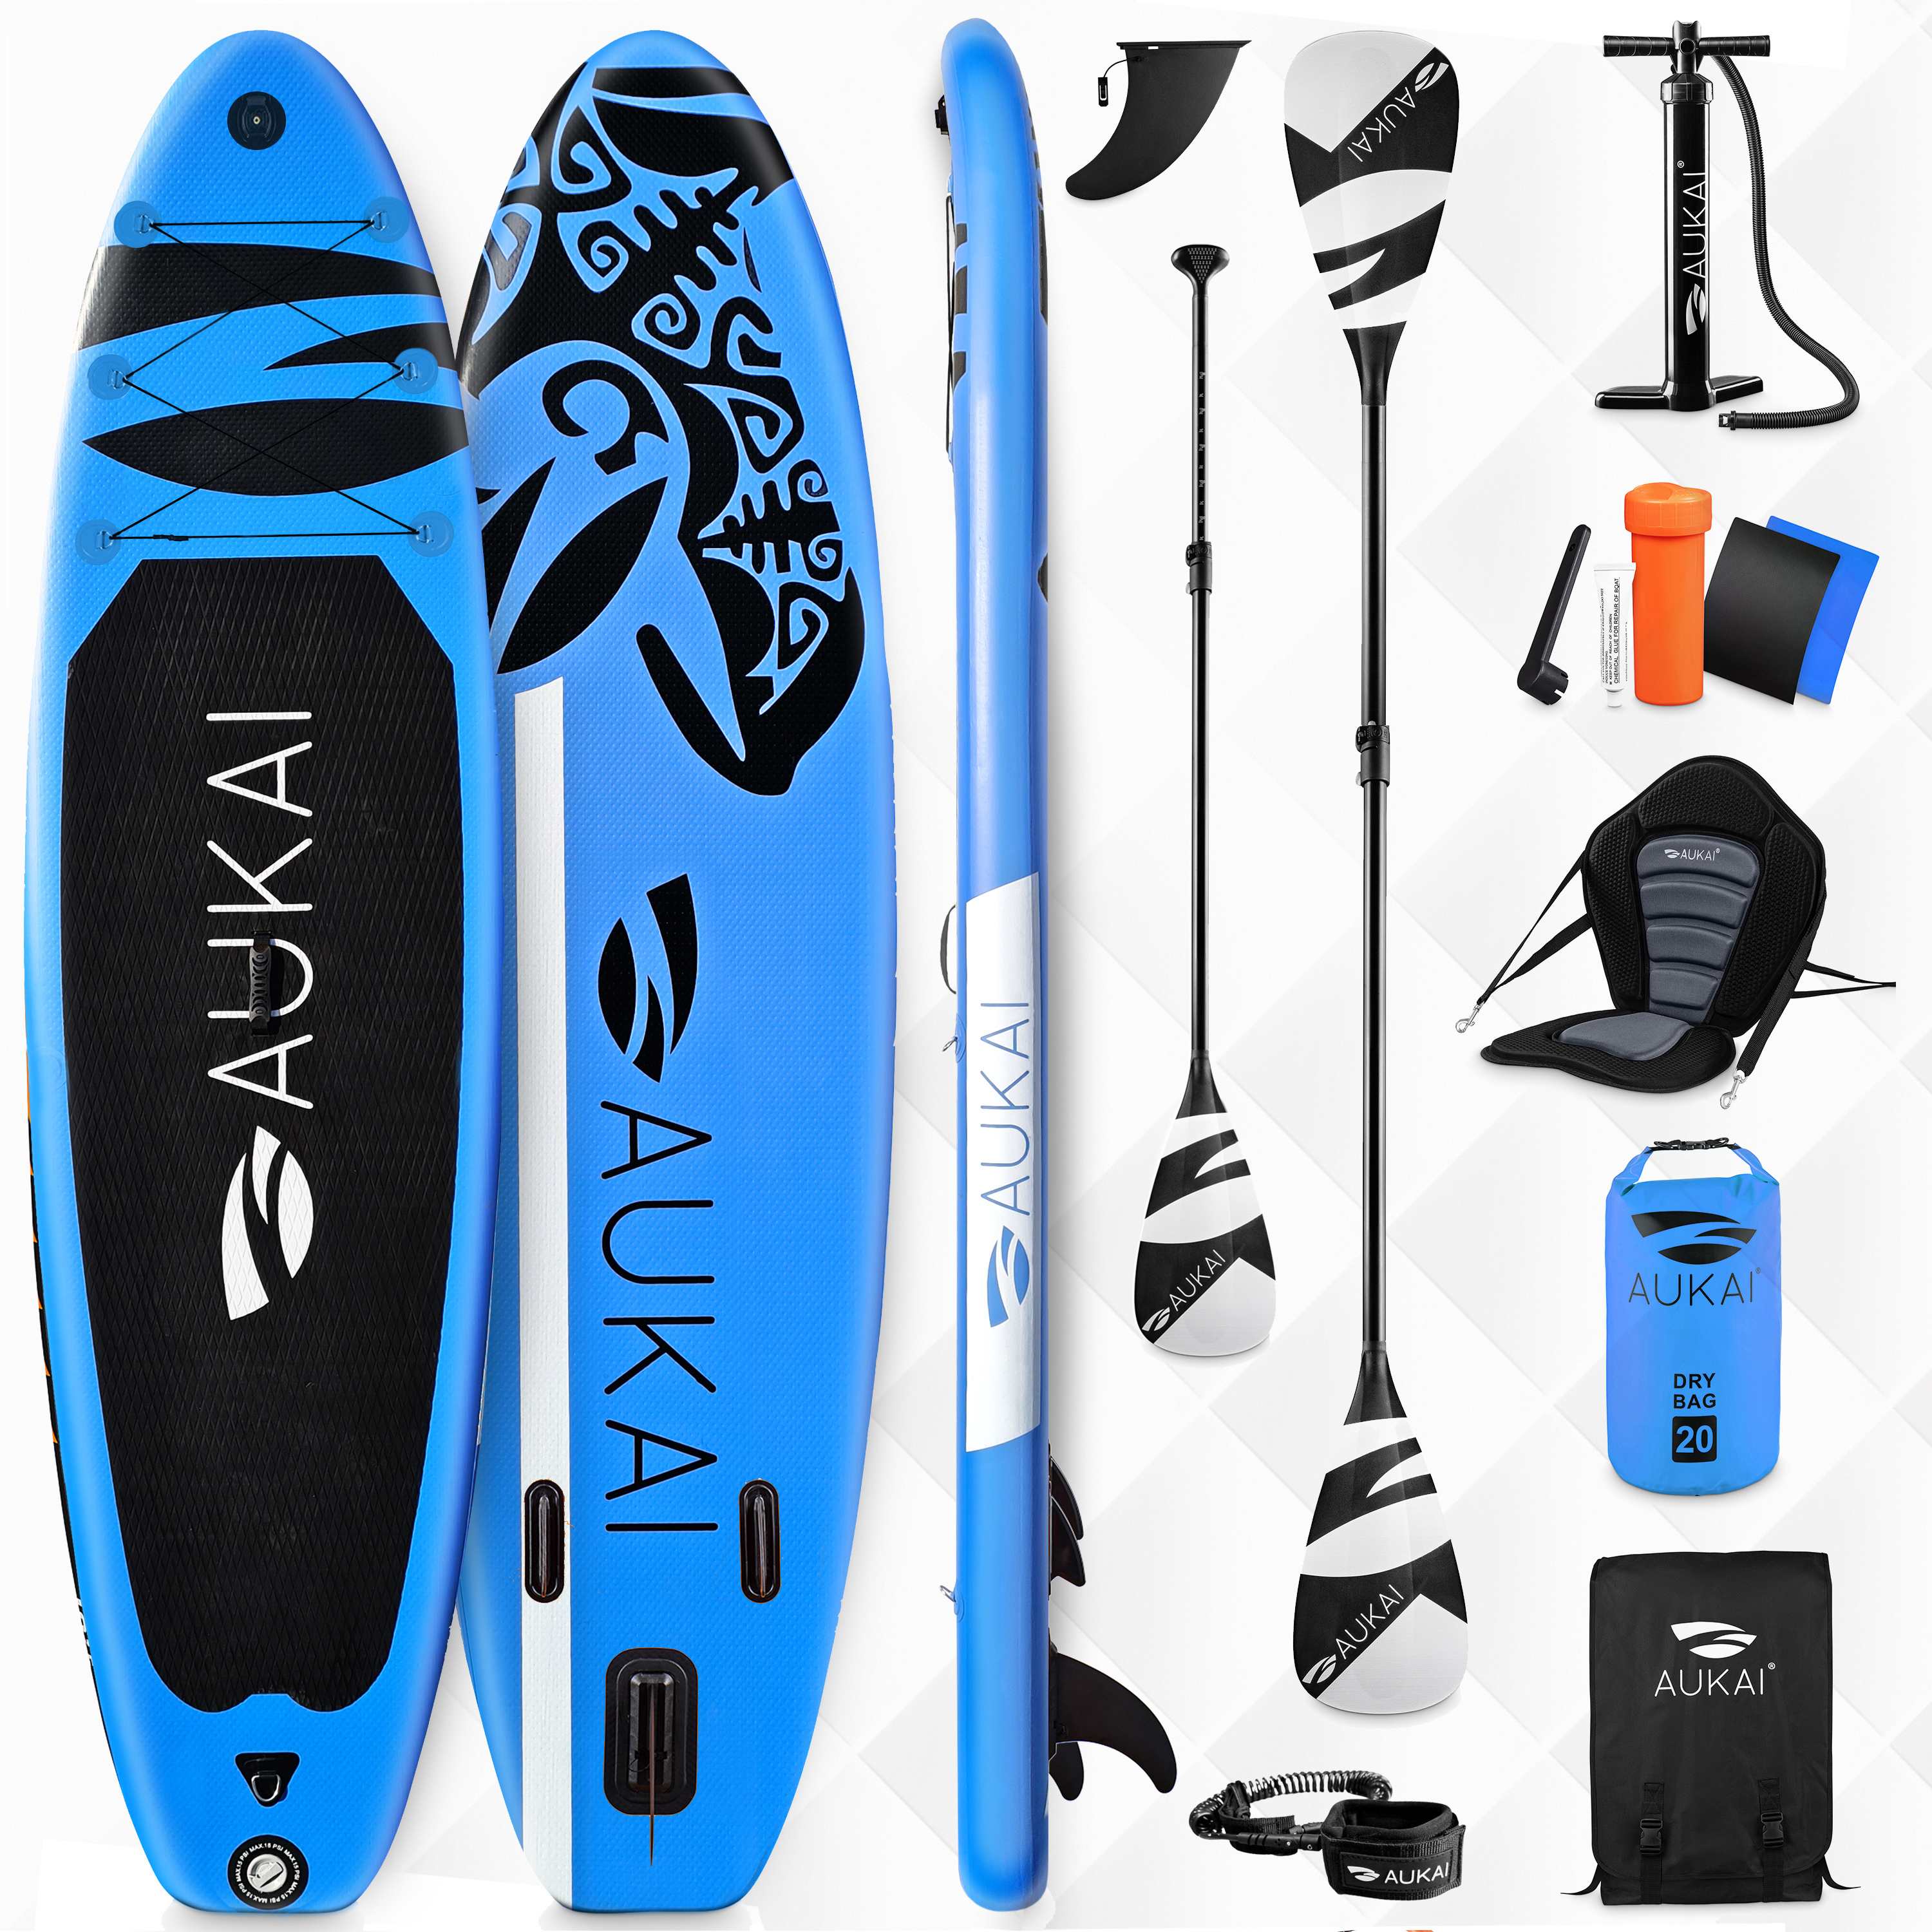 Aukai® Stand Up Paddle Board 320cm "Ocean" 2v1 s kajak sedadlom SUP Surfboard nafukovací + pádlo Surfboard Paddleboard - modrý